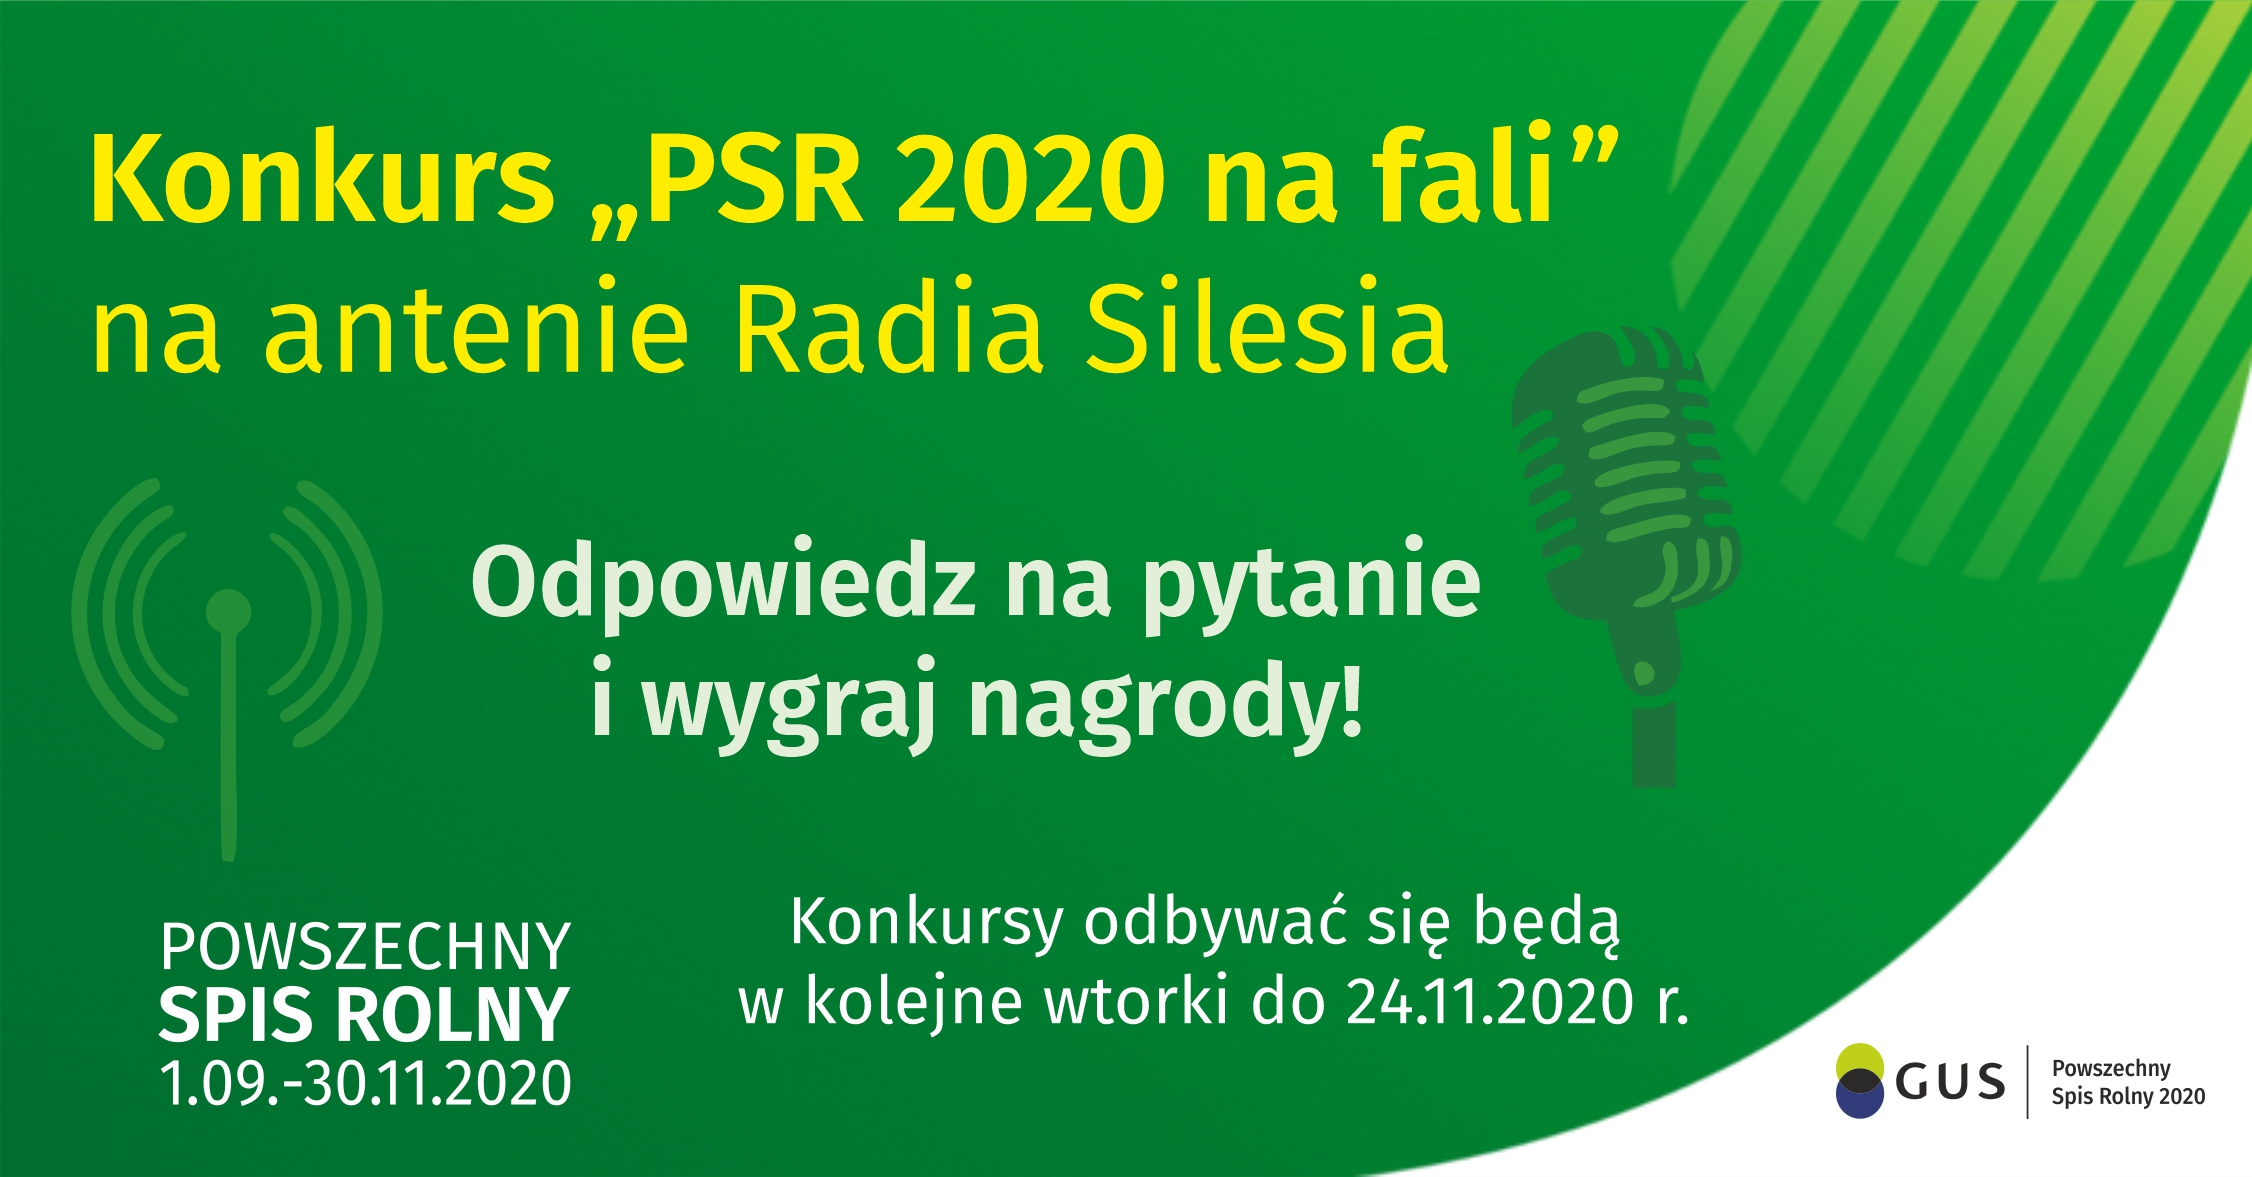 plakat "PSR 2020 na fali" promujący konkurs radiowy